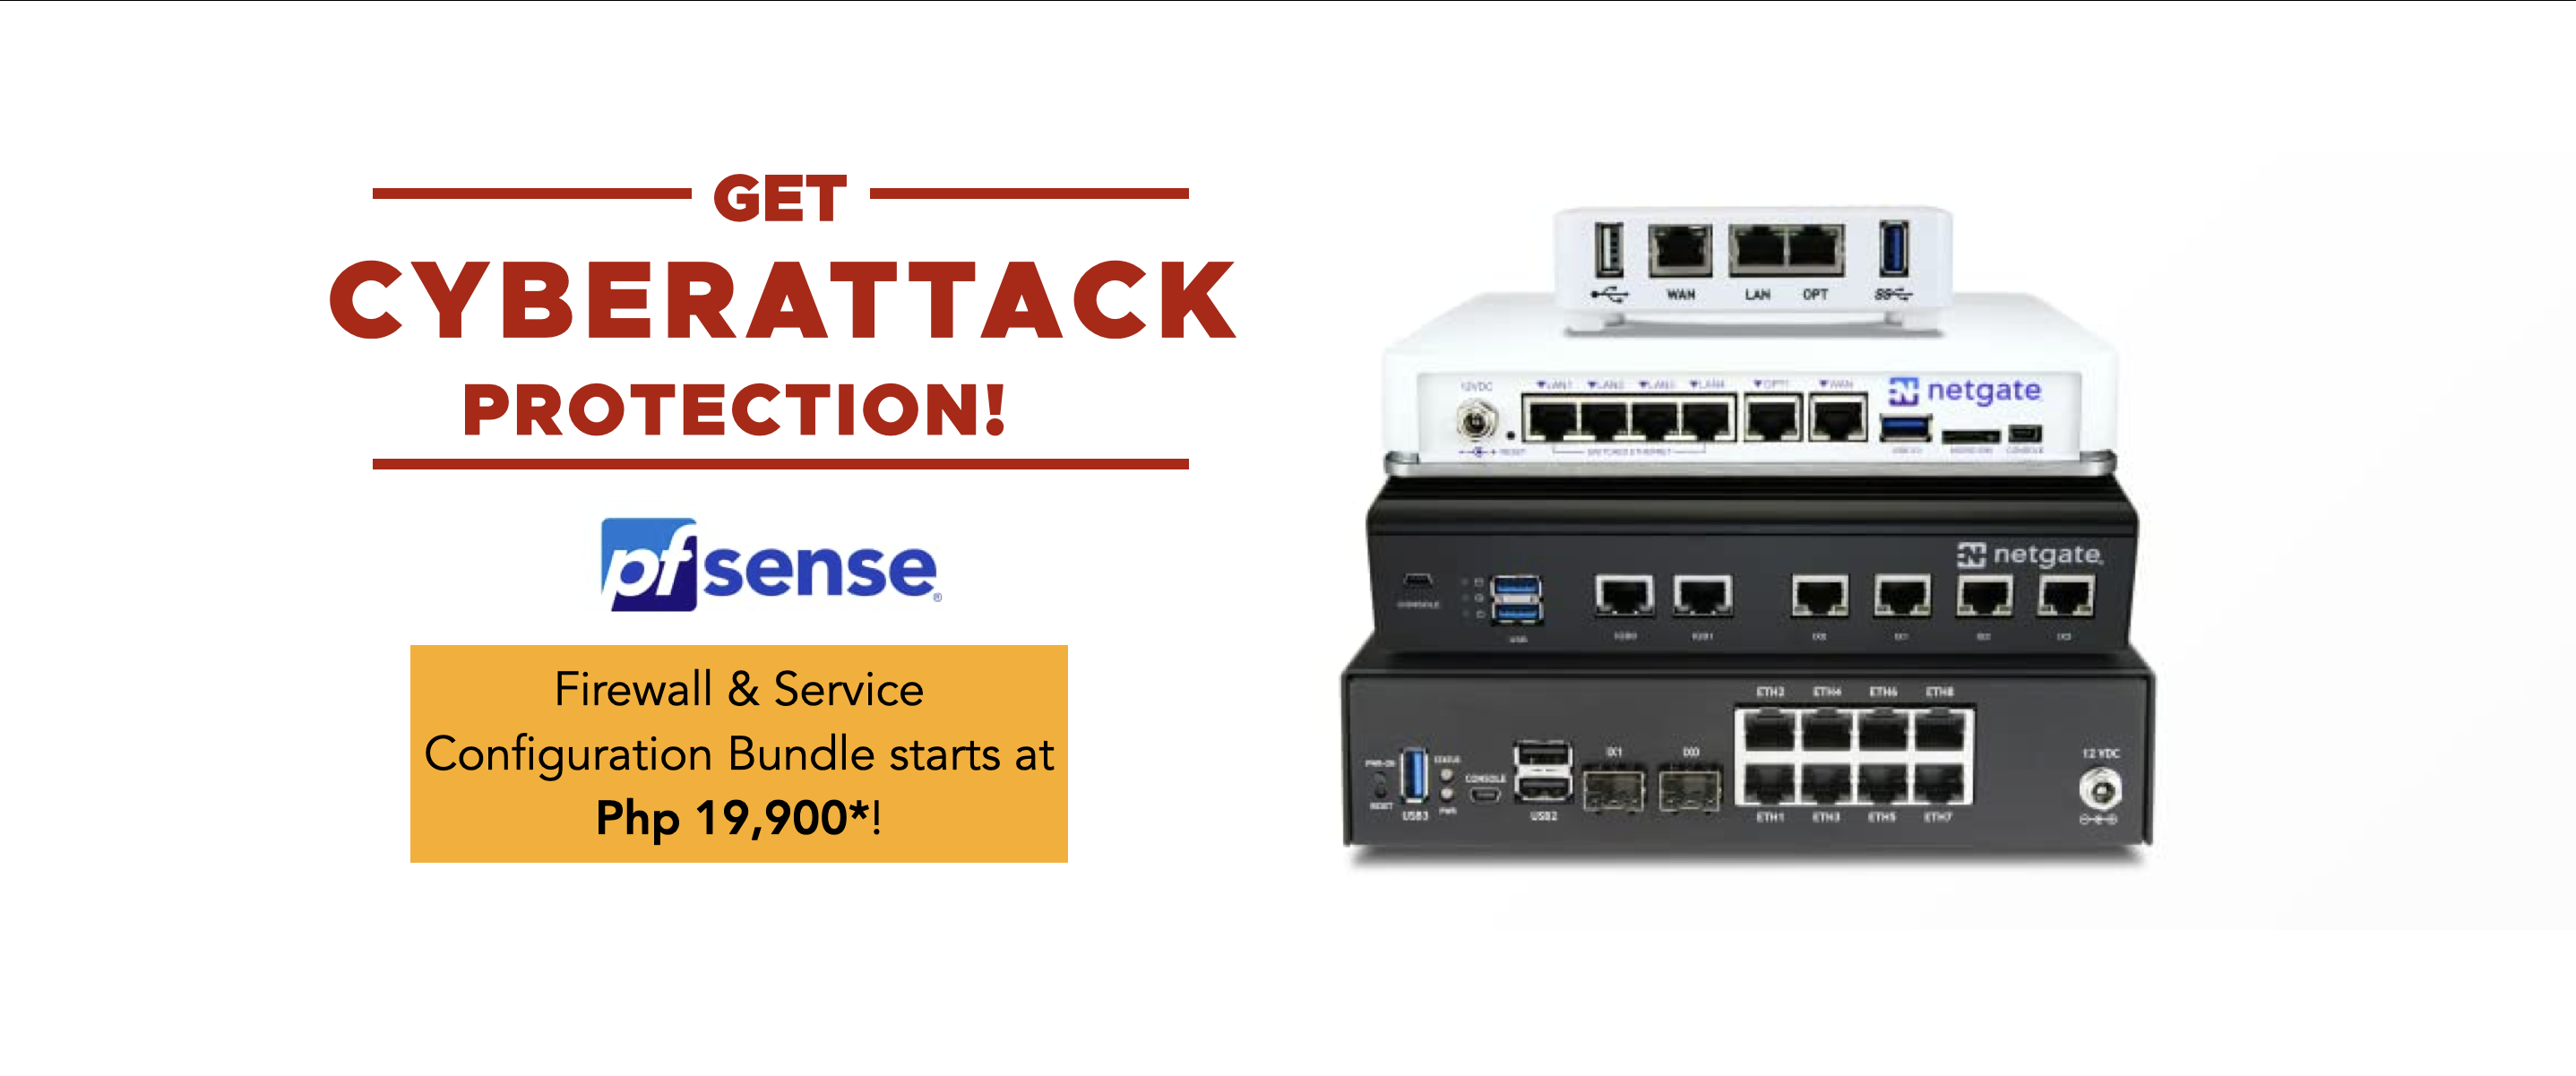 pfSense Netgate - Get cyberattack protection